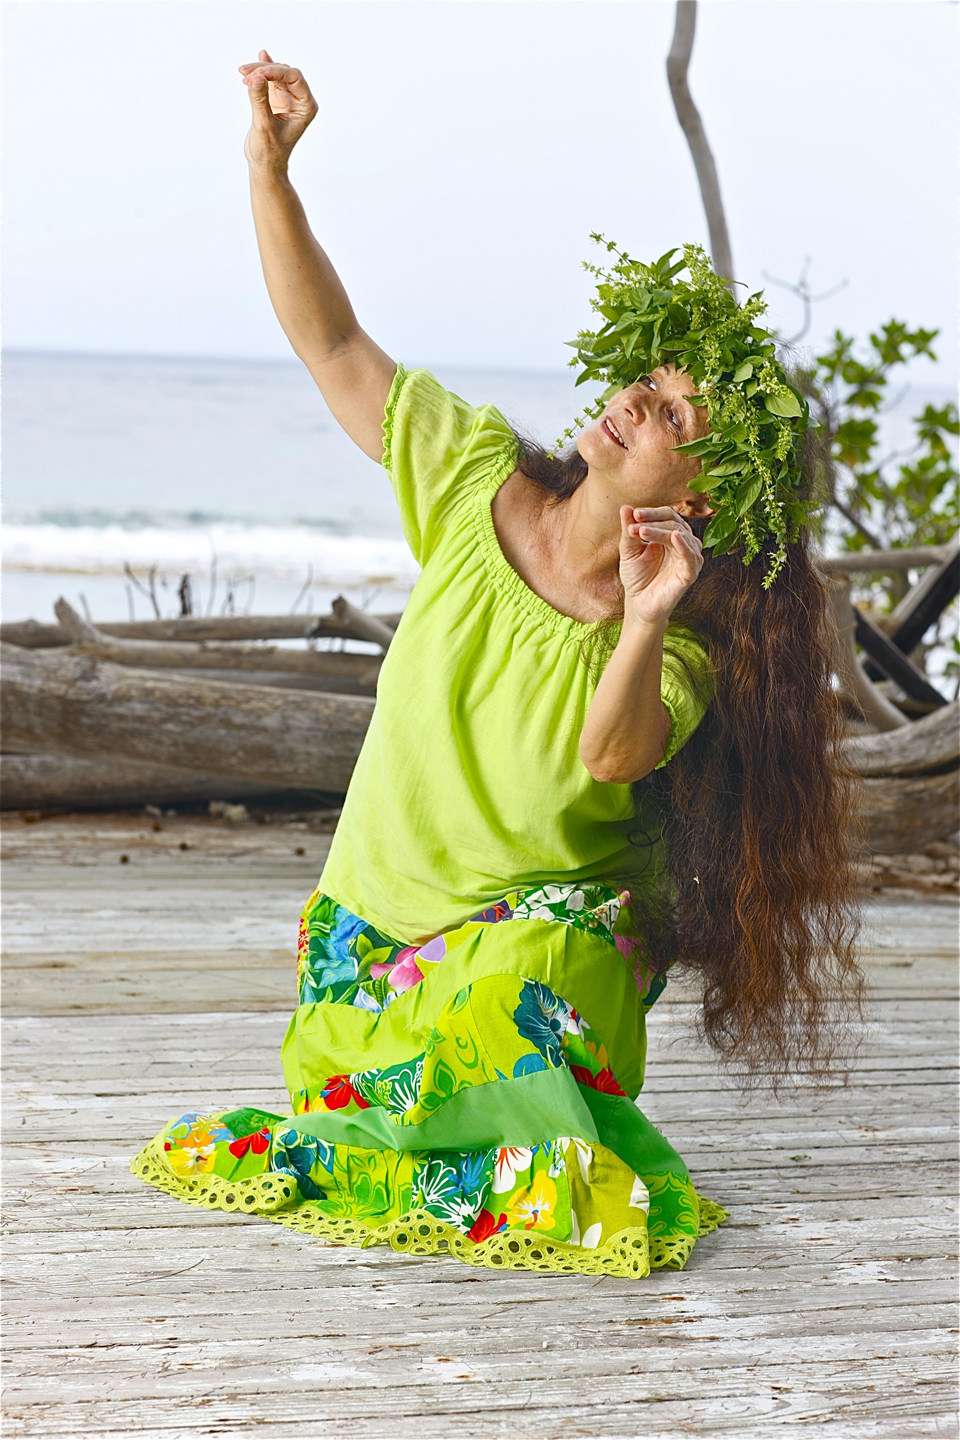 Ori Tahiti by Joelle. La danse tahitienne